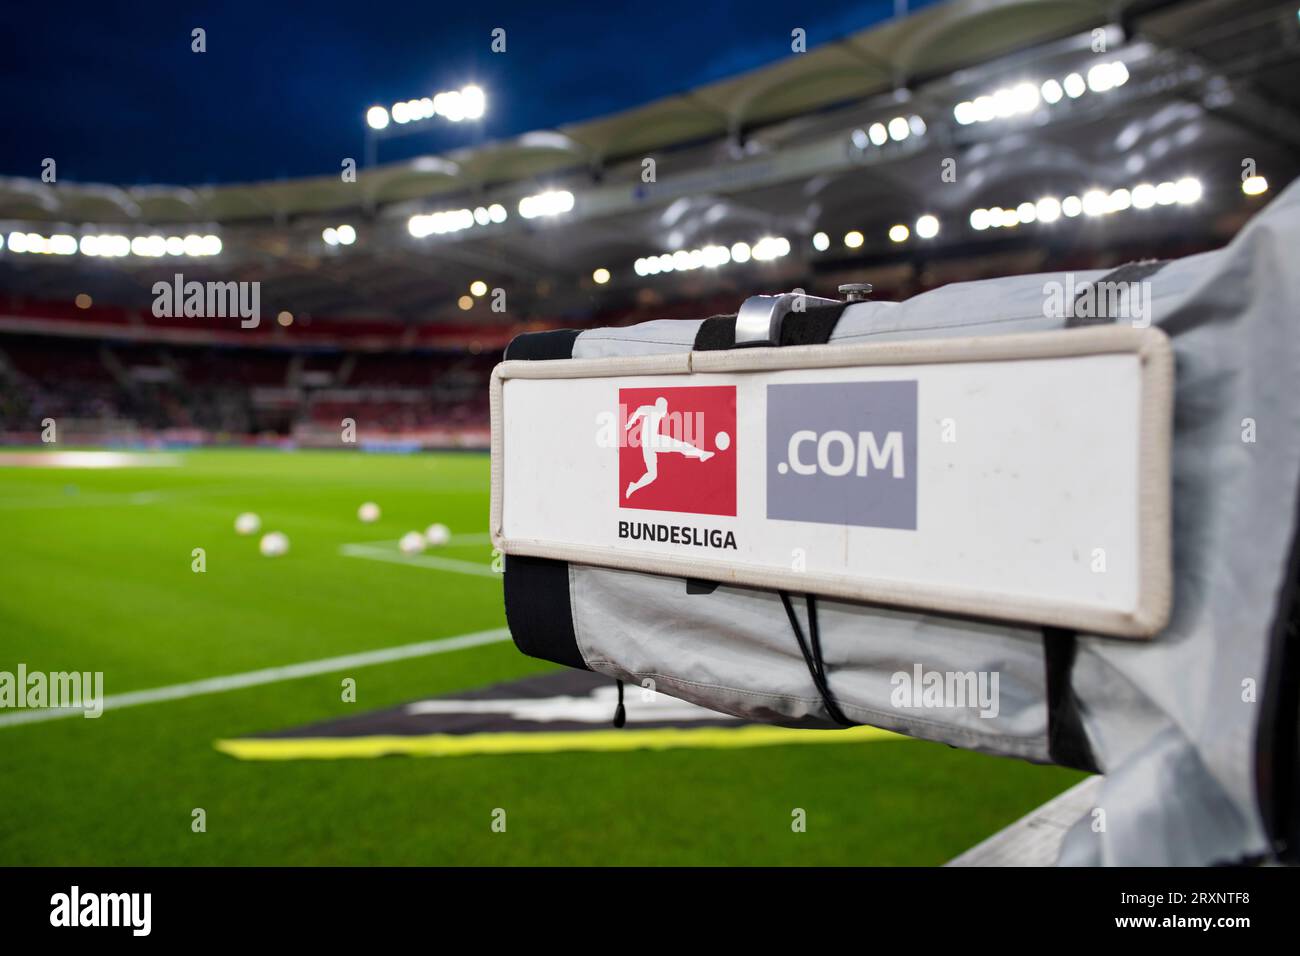 Football Bundesliga, stade, caméra de télévision, télévision, logo, gazon, heure bleue, MHPArena, MHP Arena Stuttgart, Baden-Wuerttemberg, Allemagne Banque D'Images